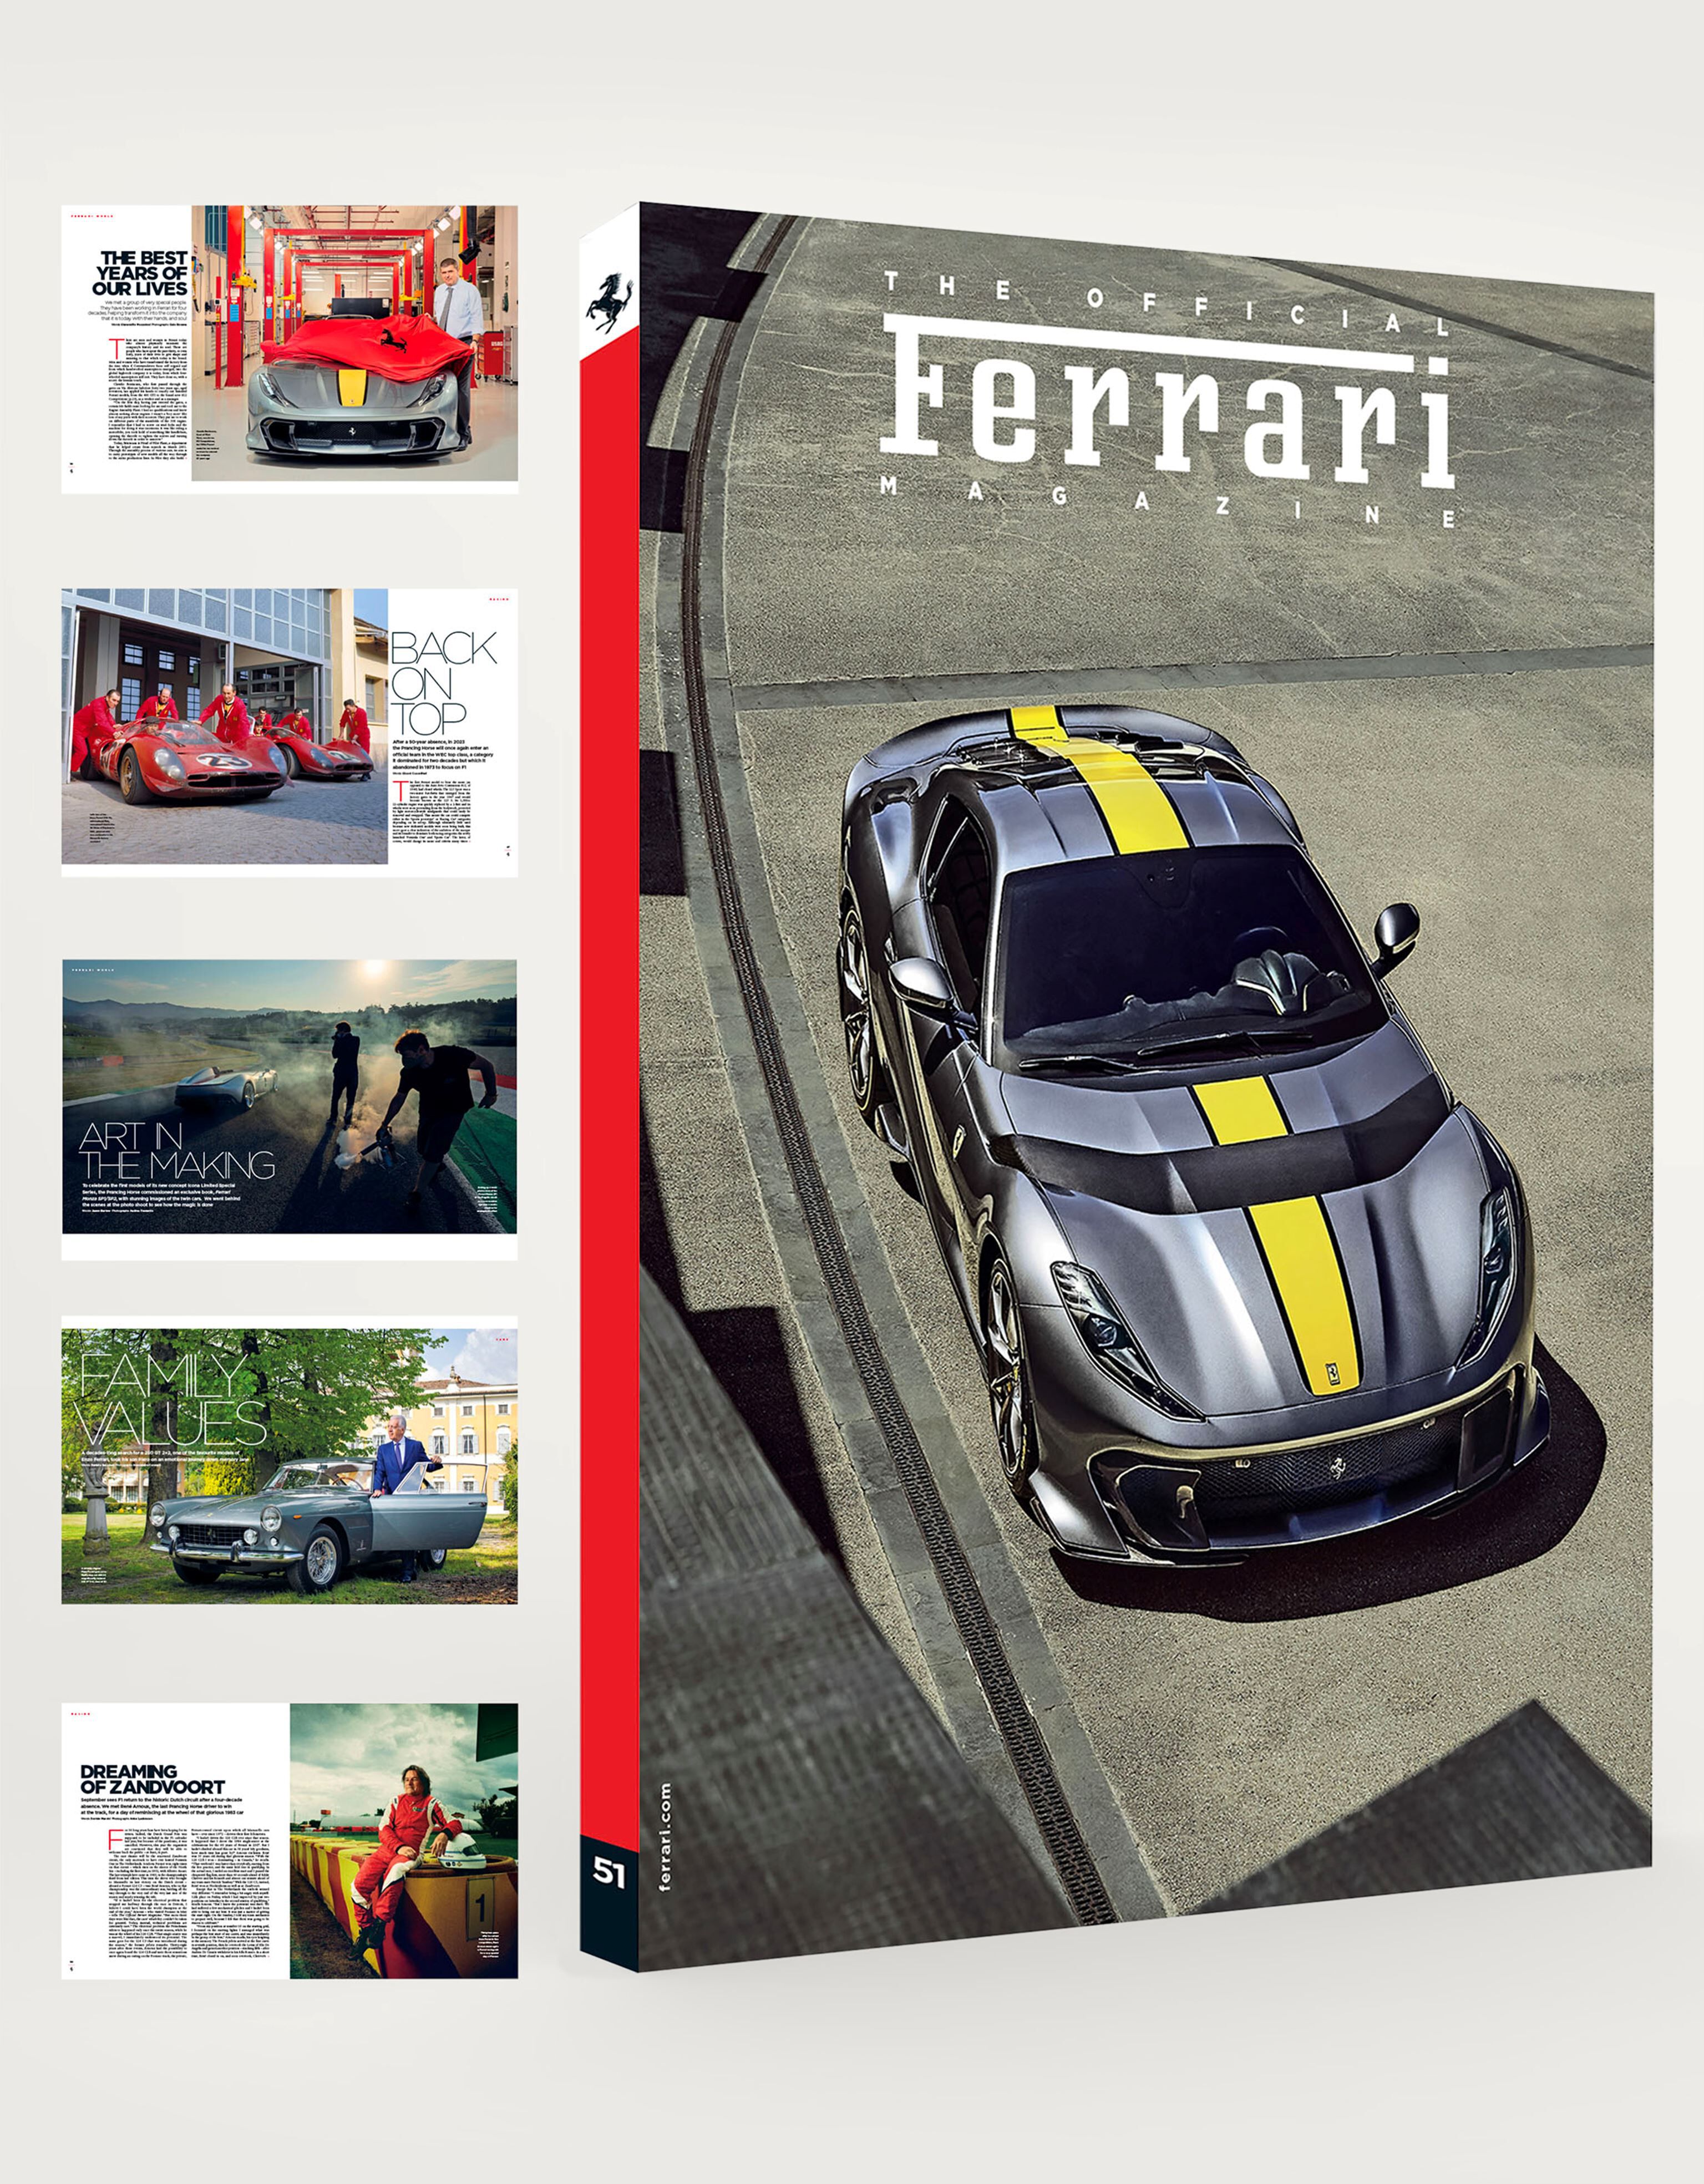 Ferrari The Official Ferrari Magazine Issue 51 MULTICOLOUR 47571f